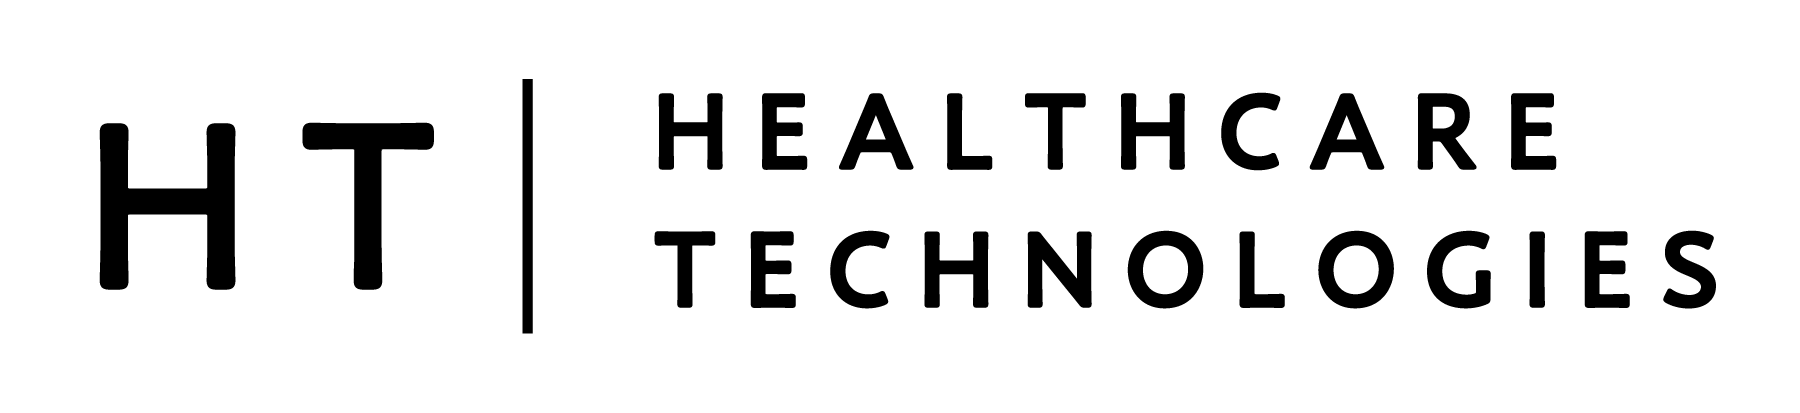 HEALTHCARE TECHNOLOGIES